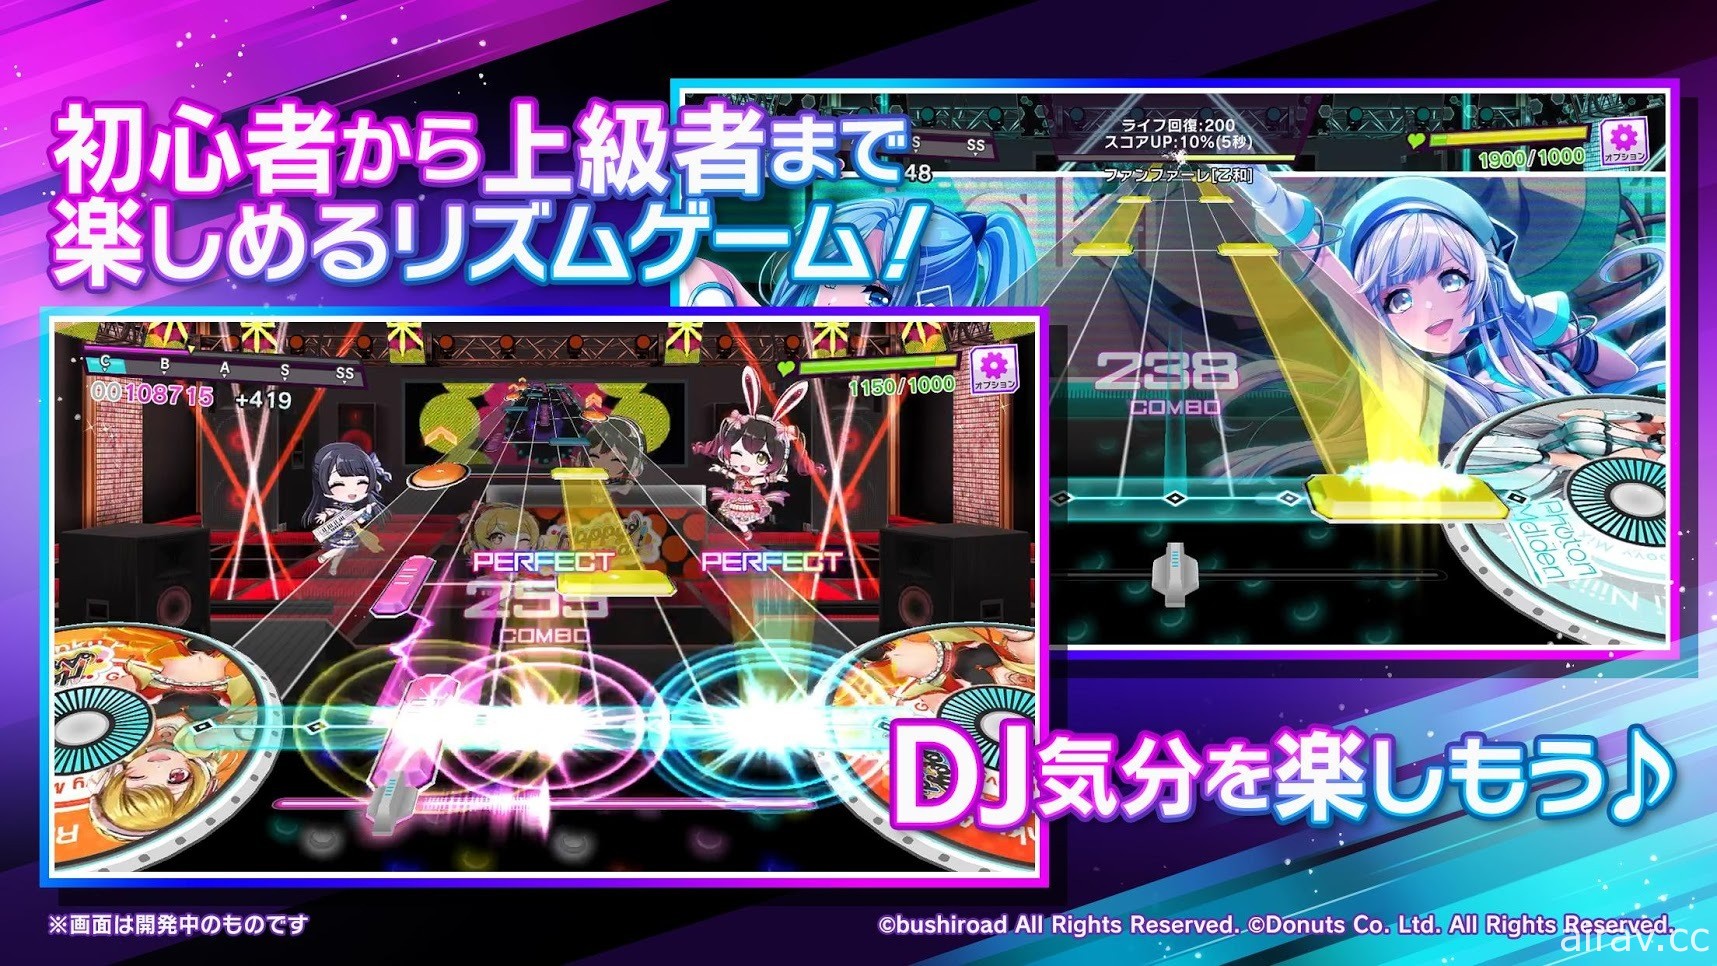 DJ 题材节奏游戏新作《D4DJ Groovy Mix》于日本双平台商店开启预约